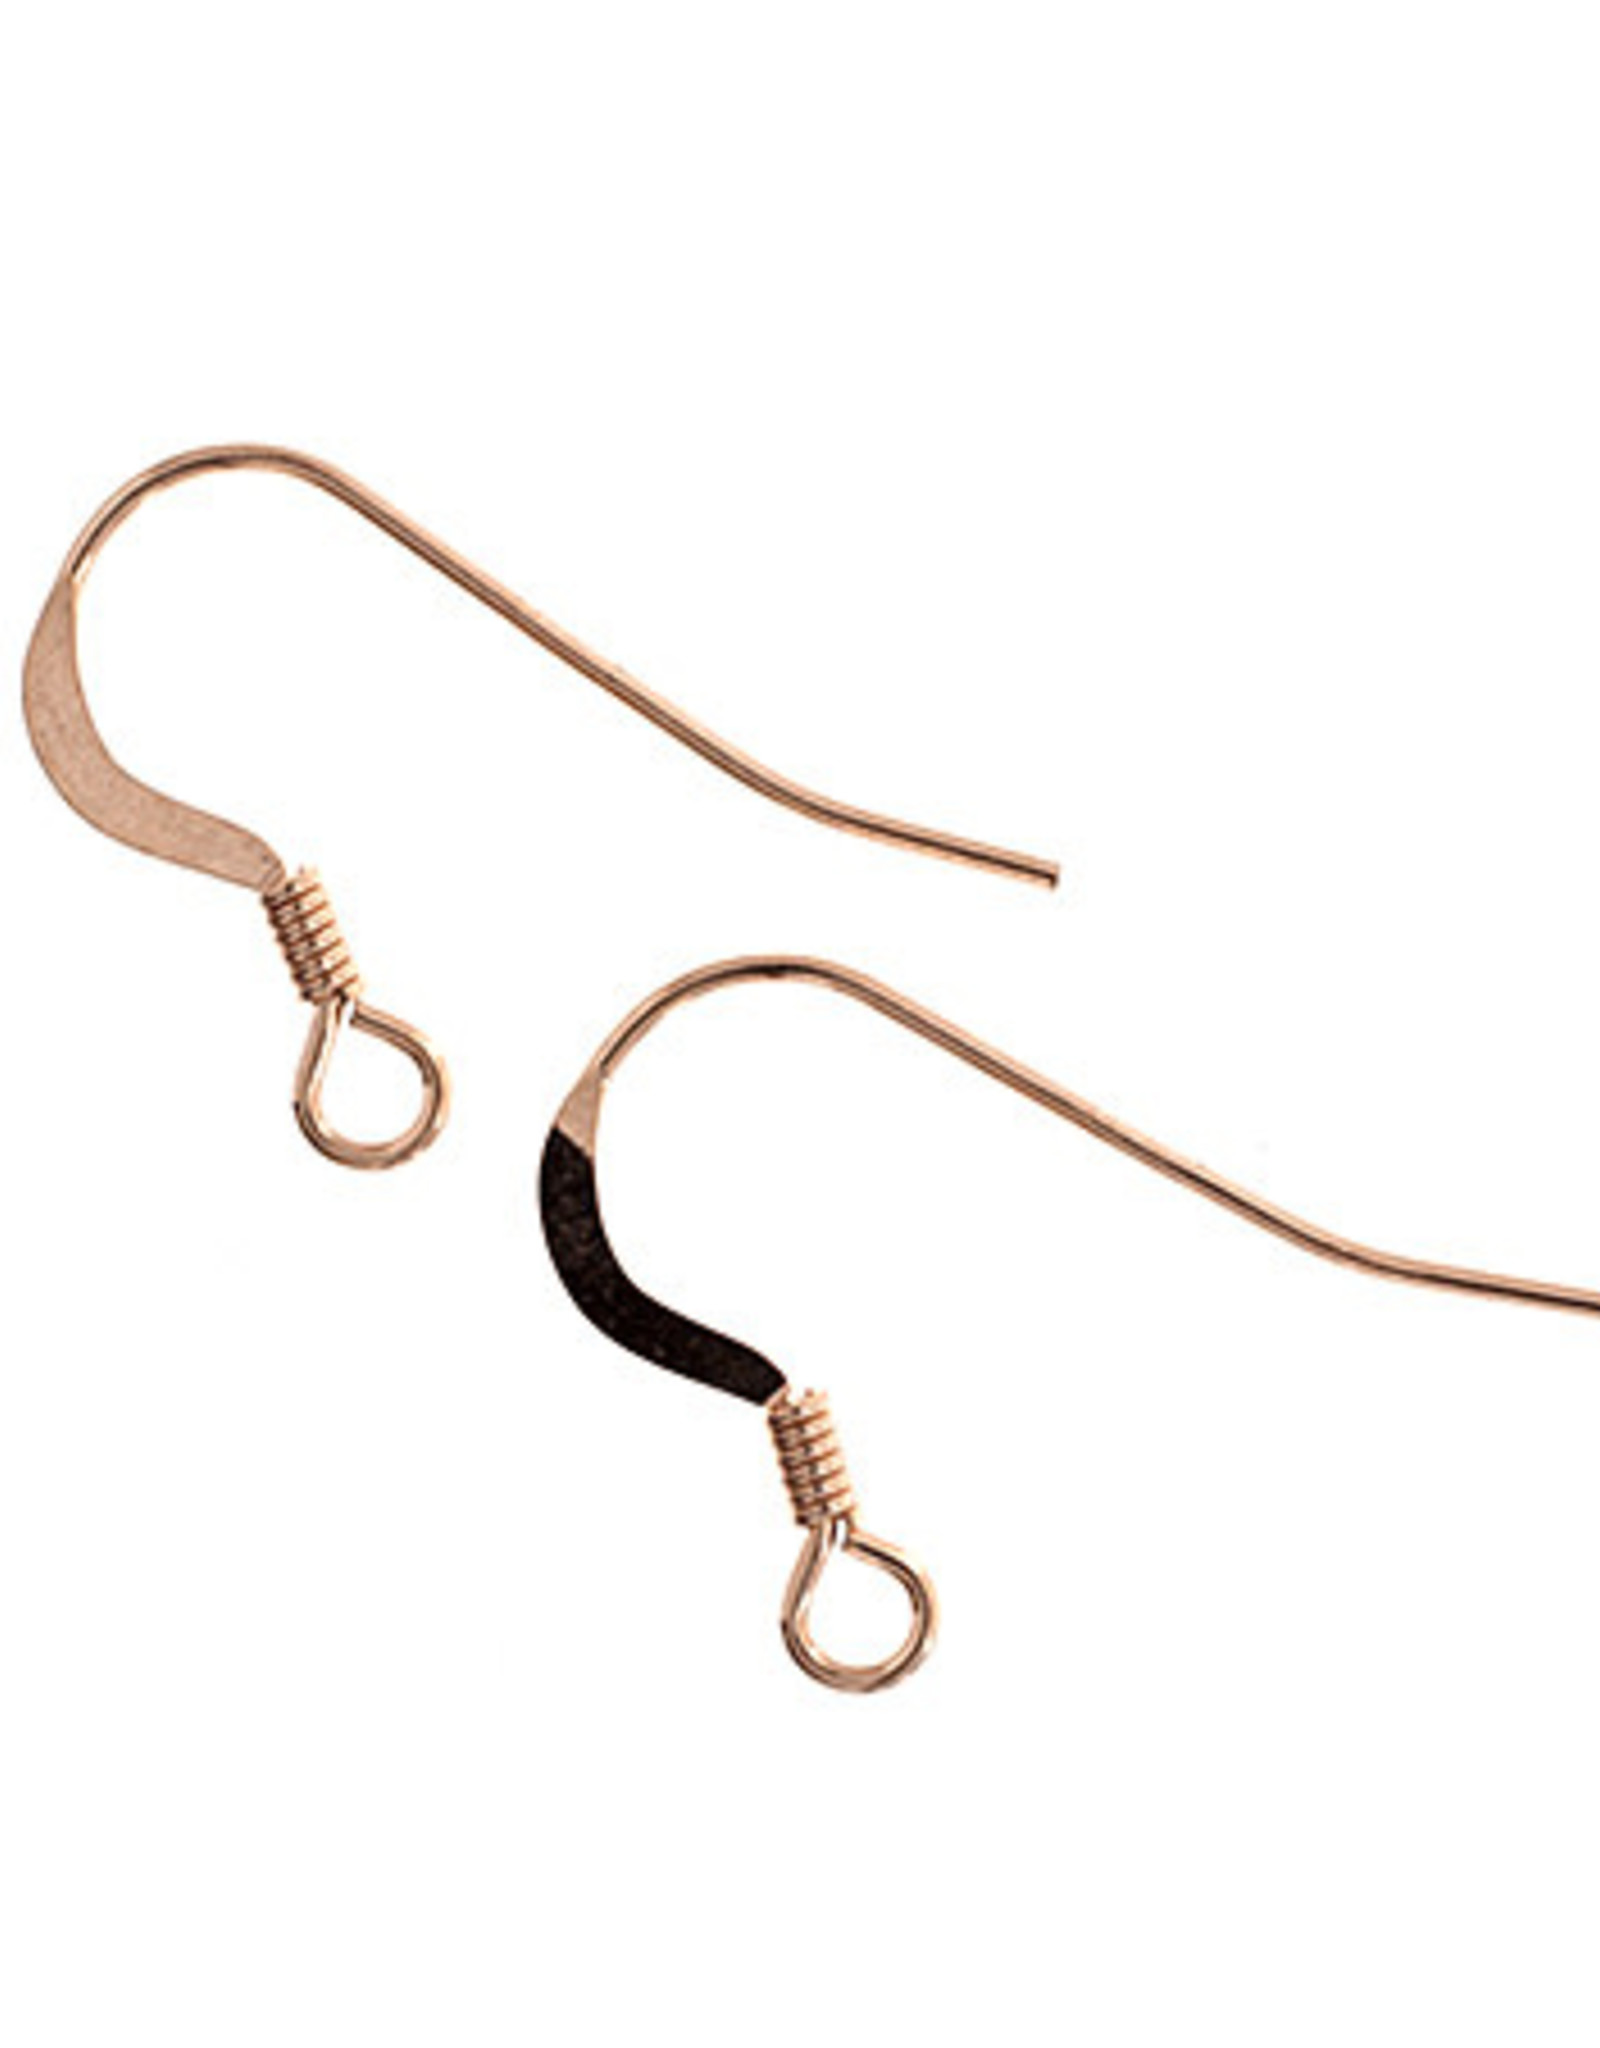 Craft Supplies RGF 14K Ear Wire Flat w/Coil (0.61mm) Aprx 1g Rose Gold Each Pair